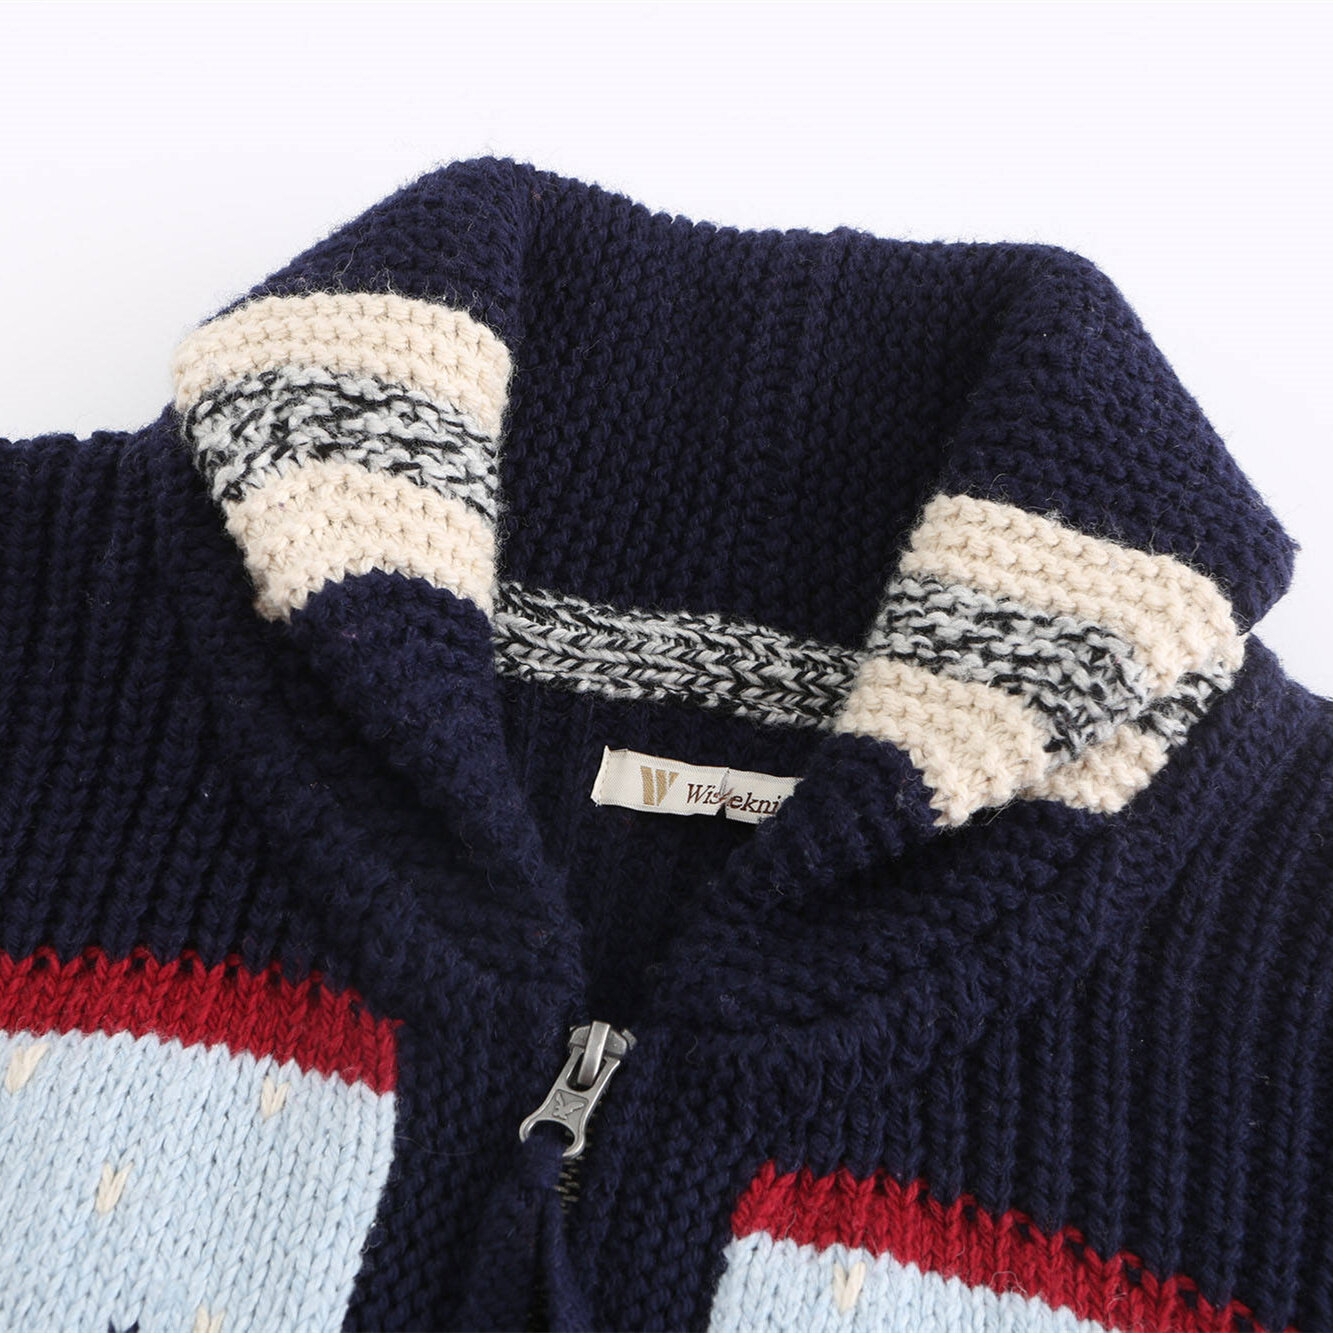 jacquard cardigan sweater,mens zipper sweater cardigan,men's cardigan sweater with zipper,mens cardigan sweater zipper